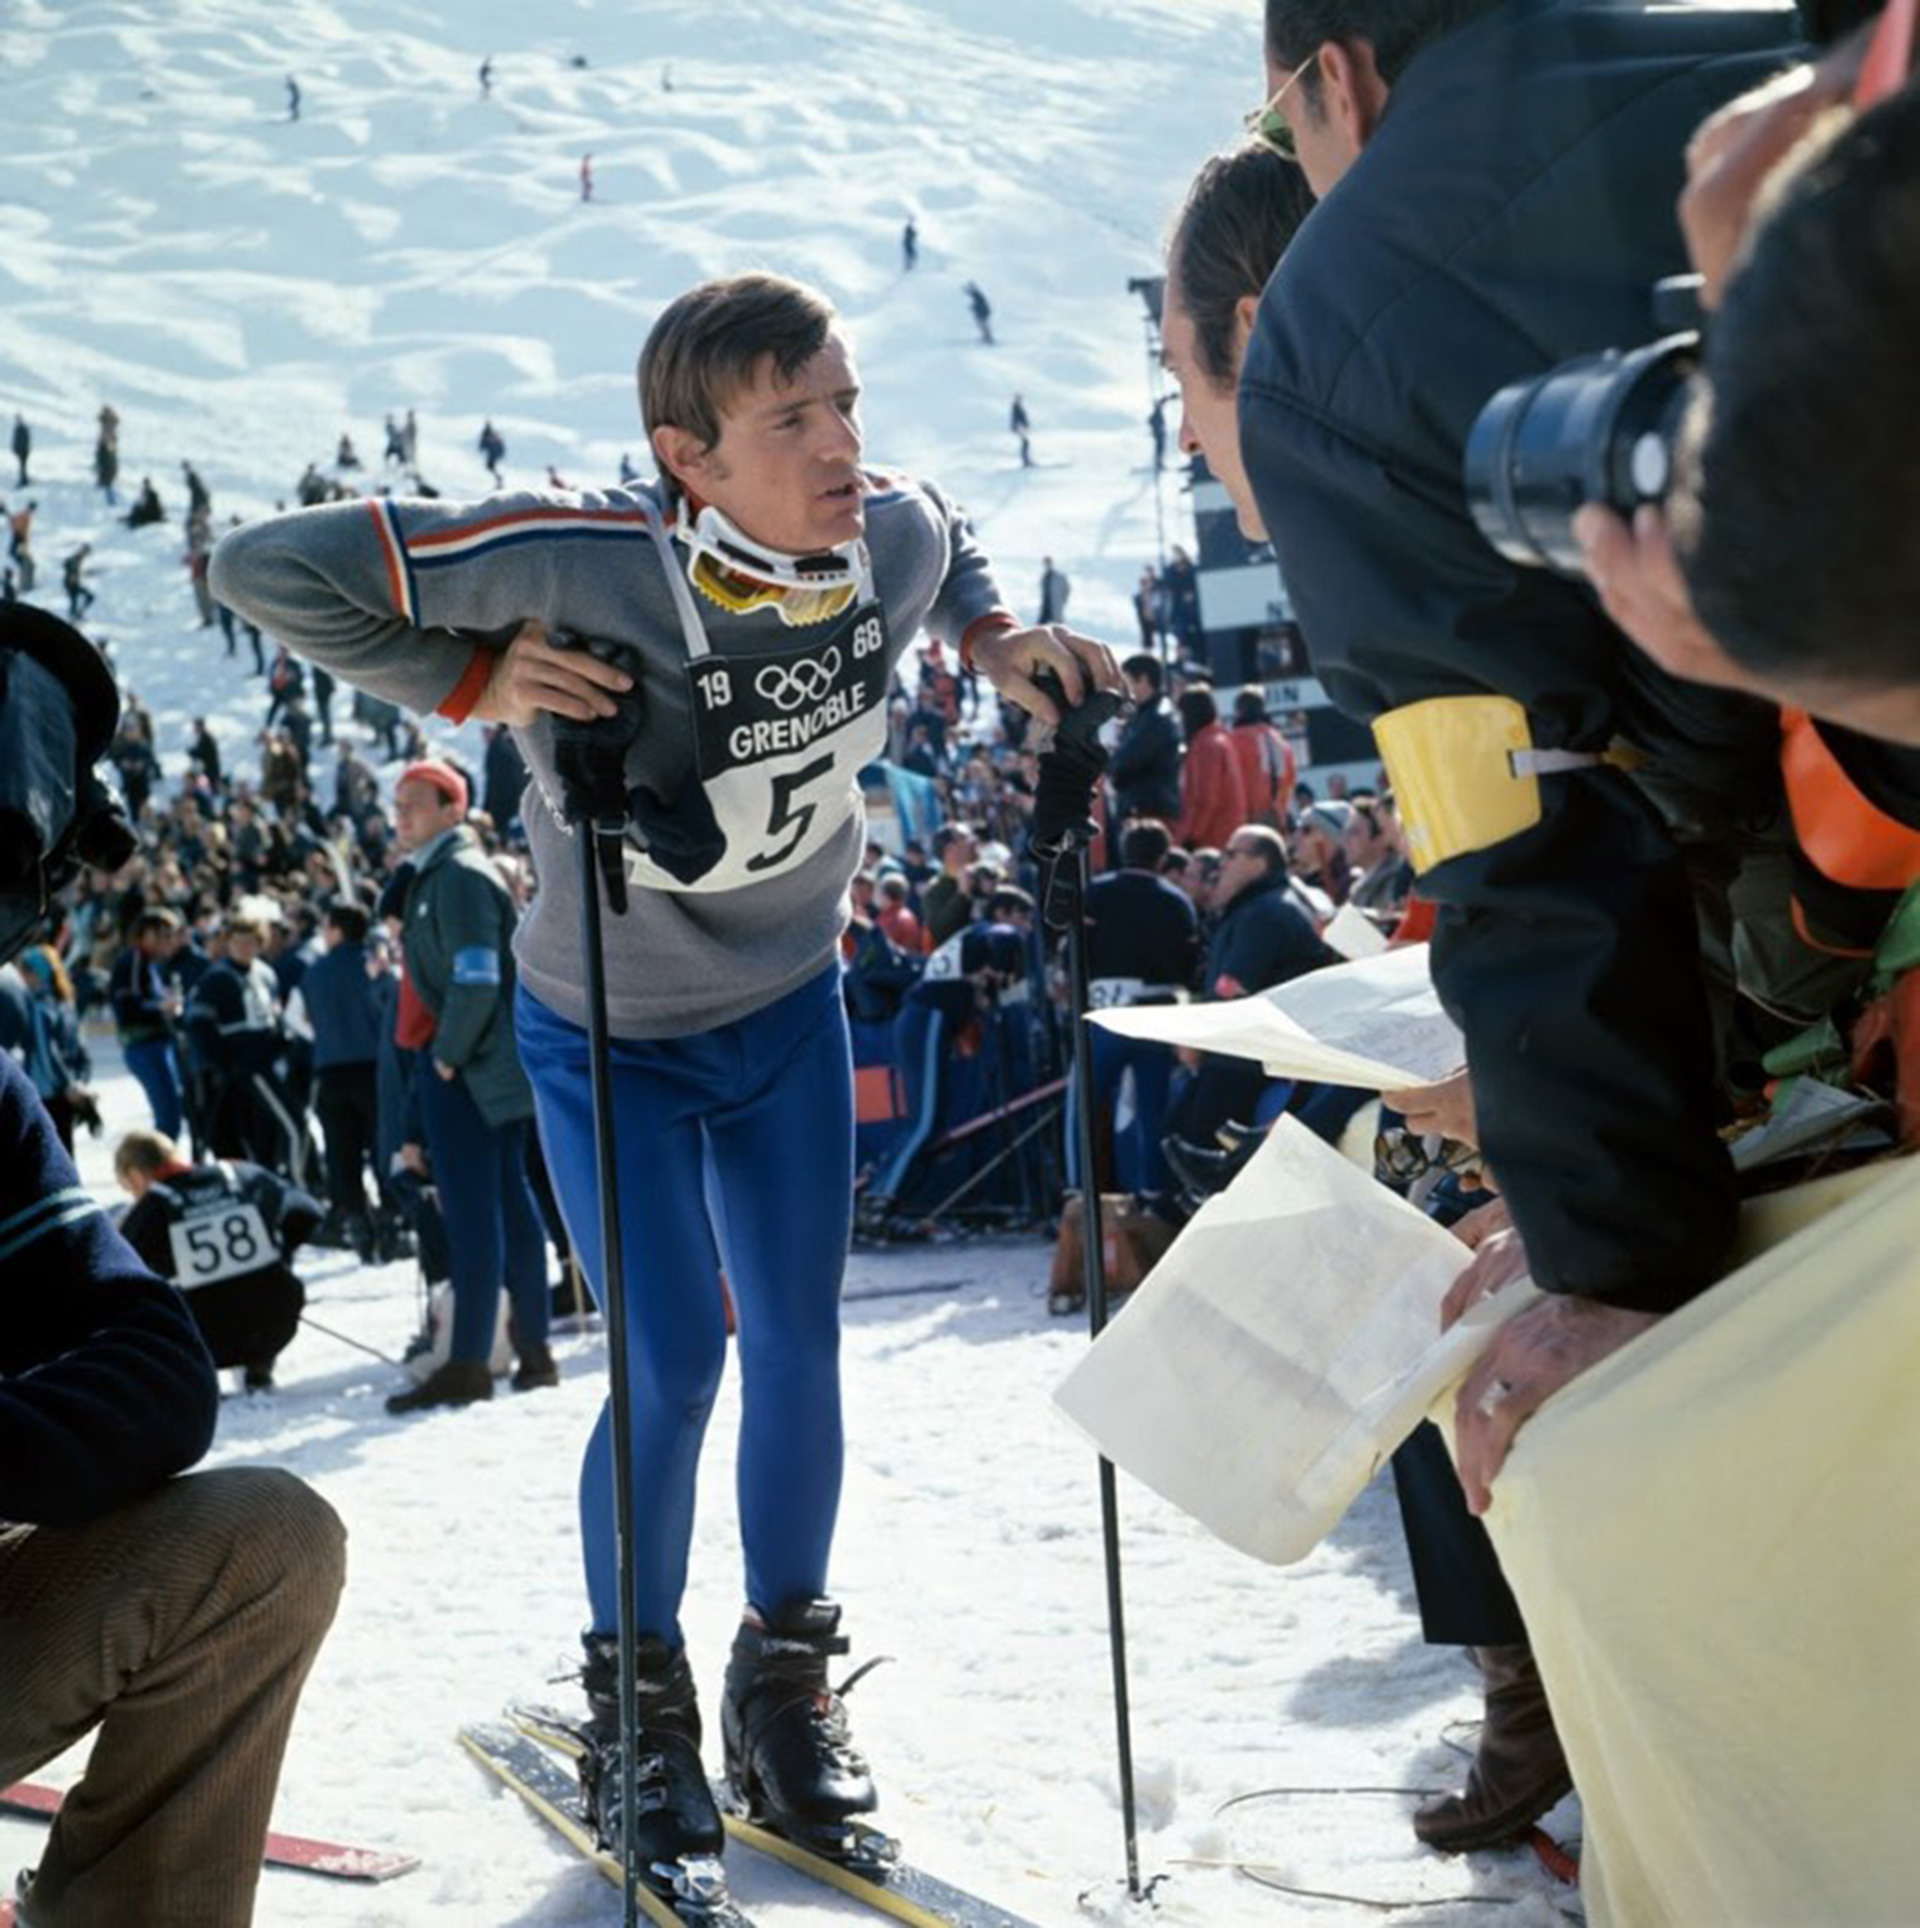 Chamrousse champion Jean-claude Killy JO jeux olympiques hiver 1968 ski alpin médaille or célébration 50 ans station ski isère france - © Presse Sports